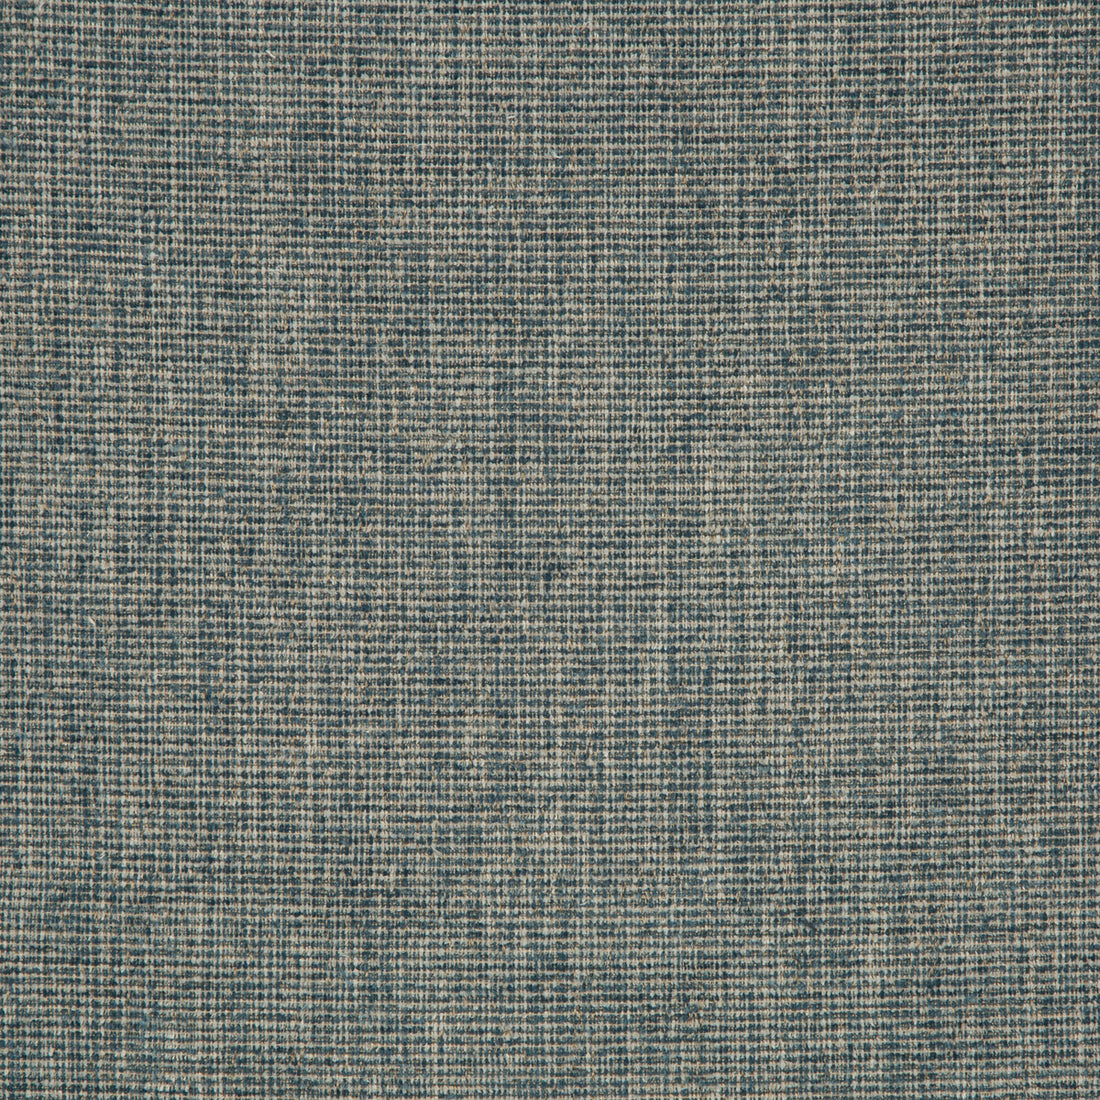 Kravet Smart fabric in 35949-511 color - pattern 35949.511.0 - by Kravet Smart in the Performance Kravetarmor collection